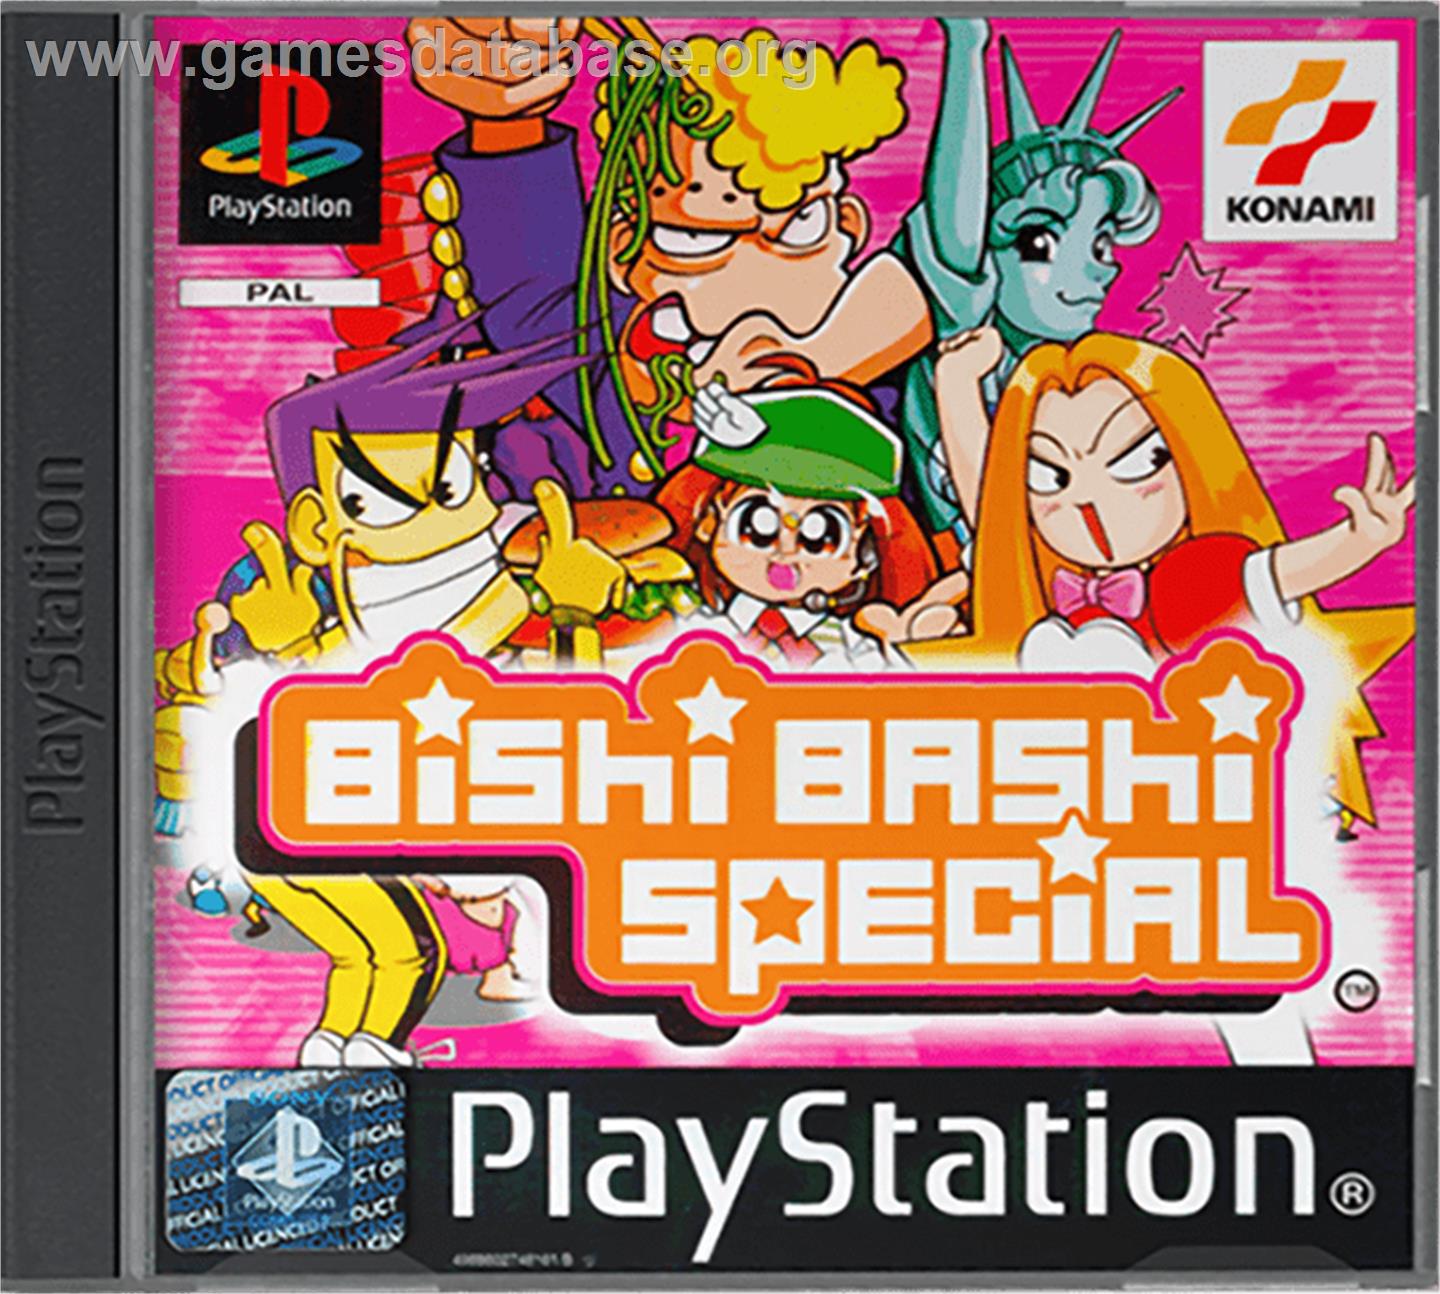 Bishi Bashi Special - Sony Playstation - Artwork - Box